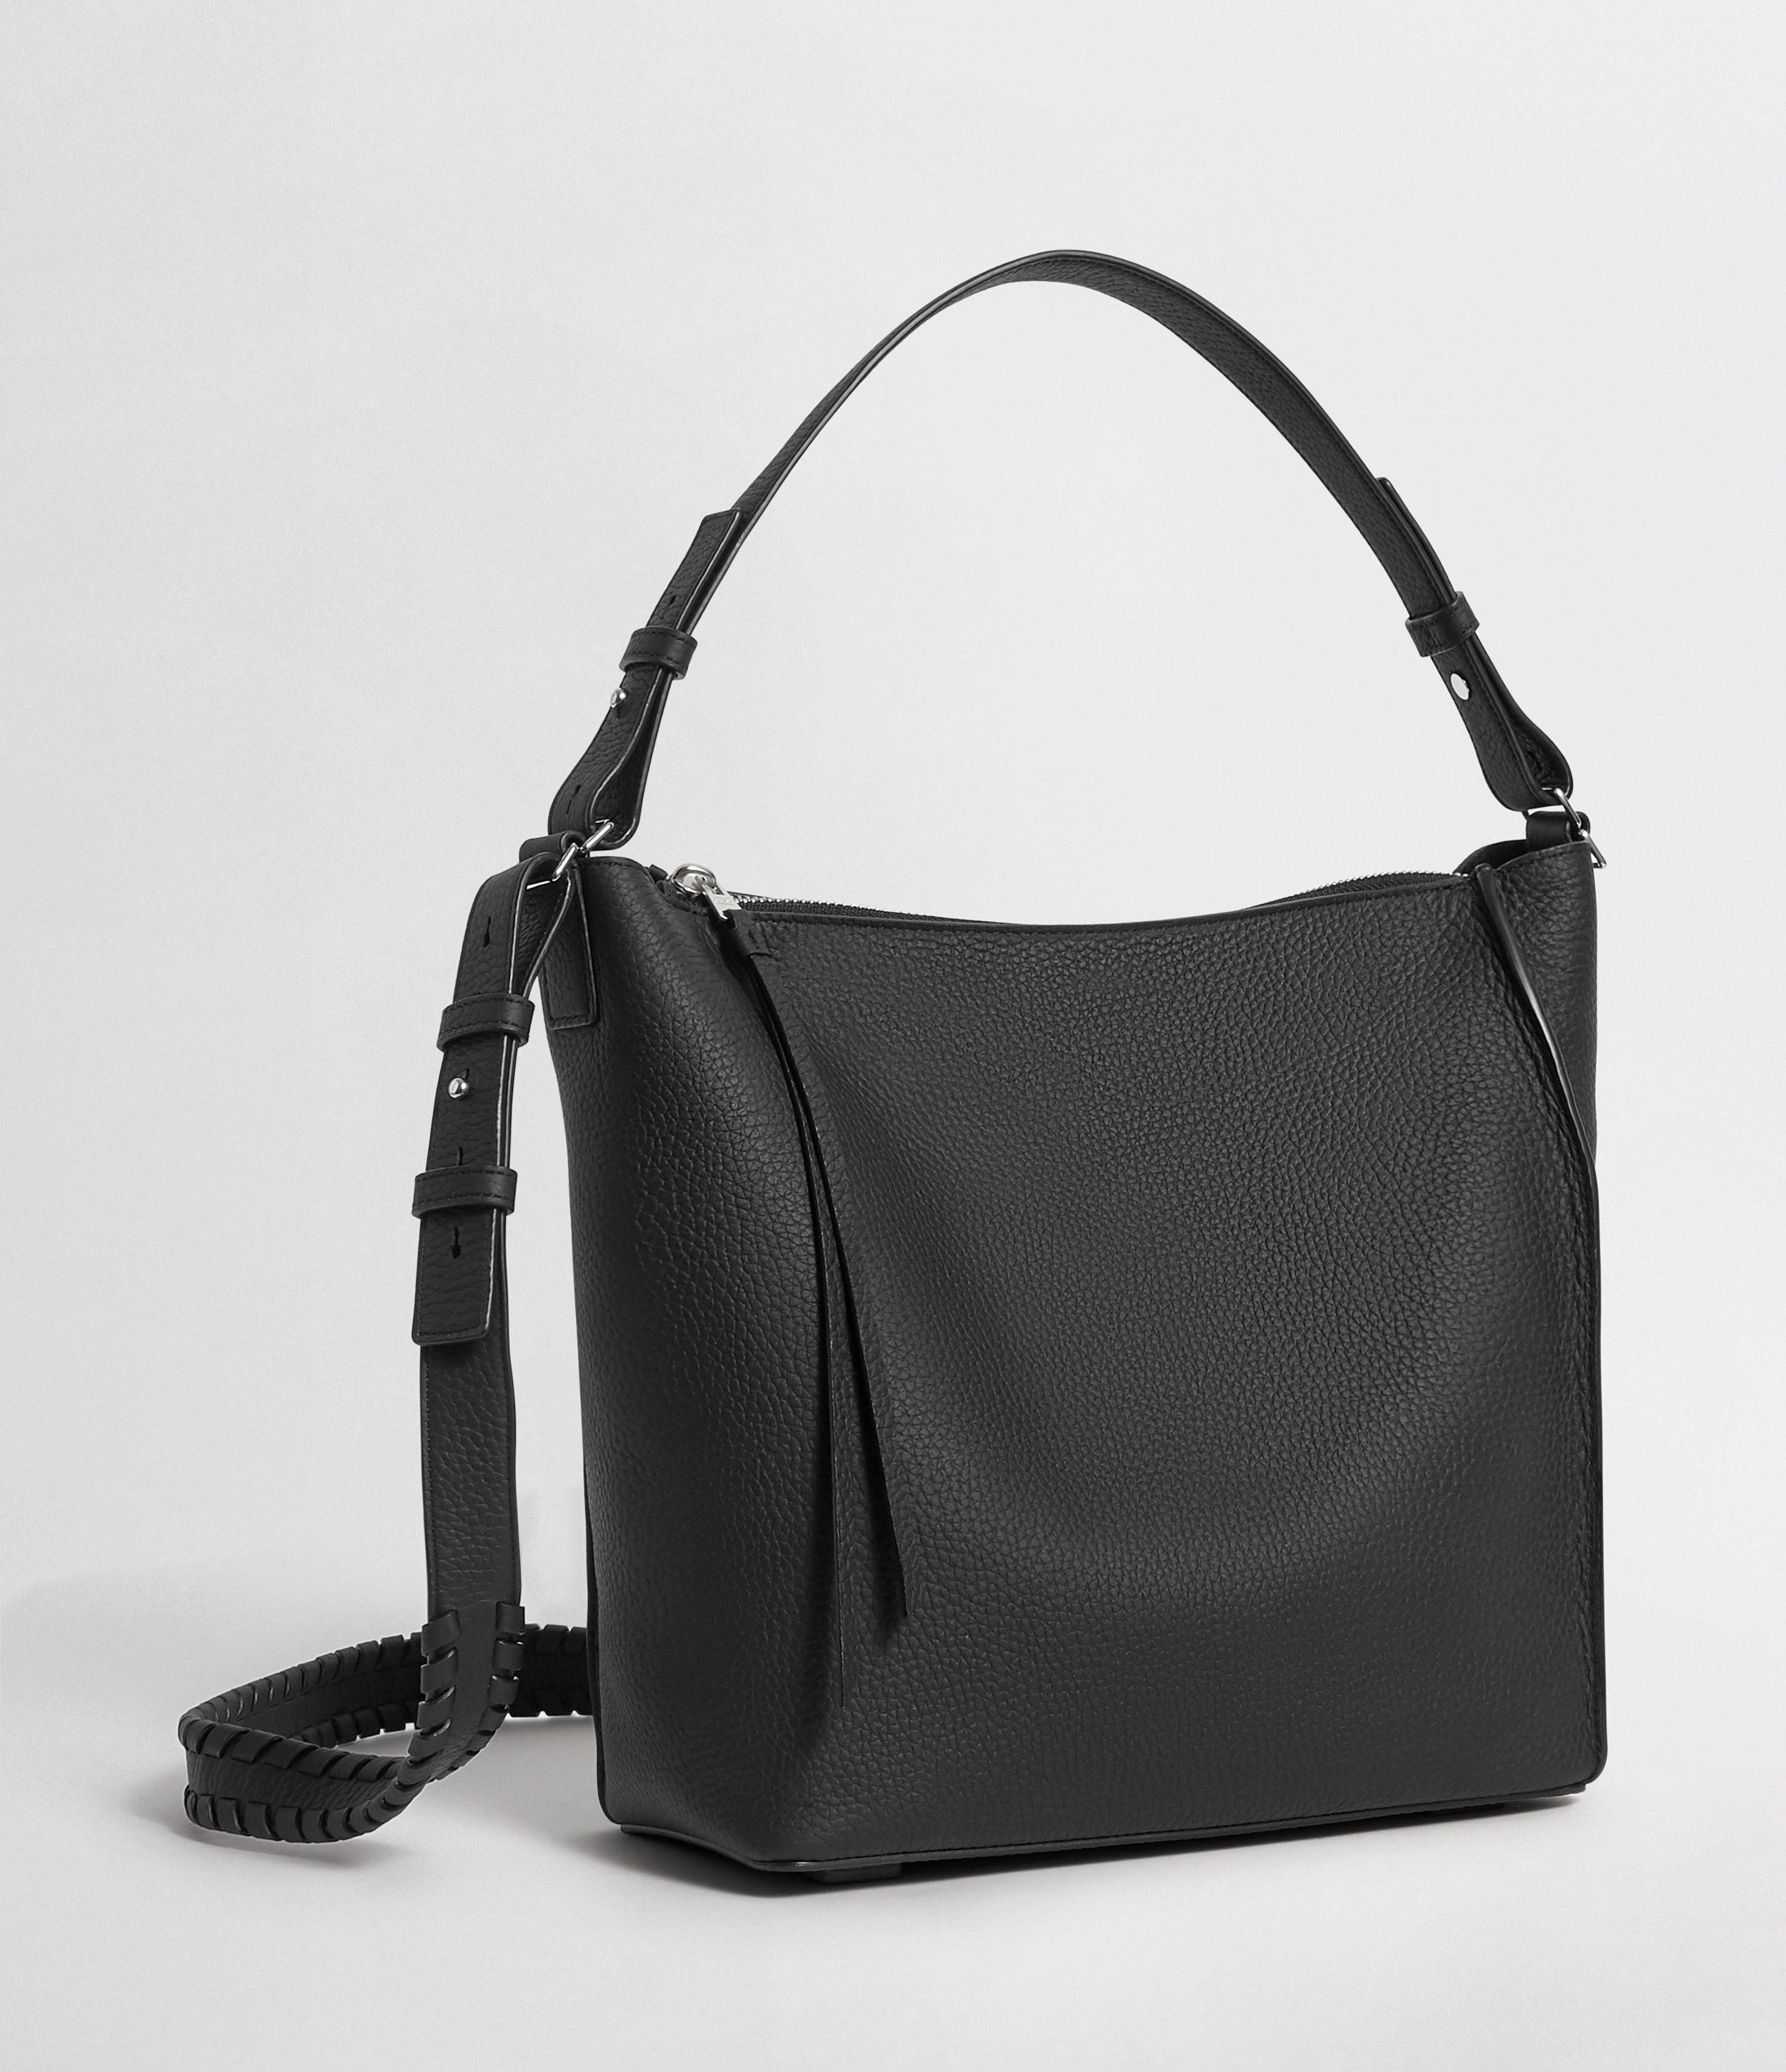 AllSaints Kita Leather Crossbody Bag in Black - Lyst